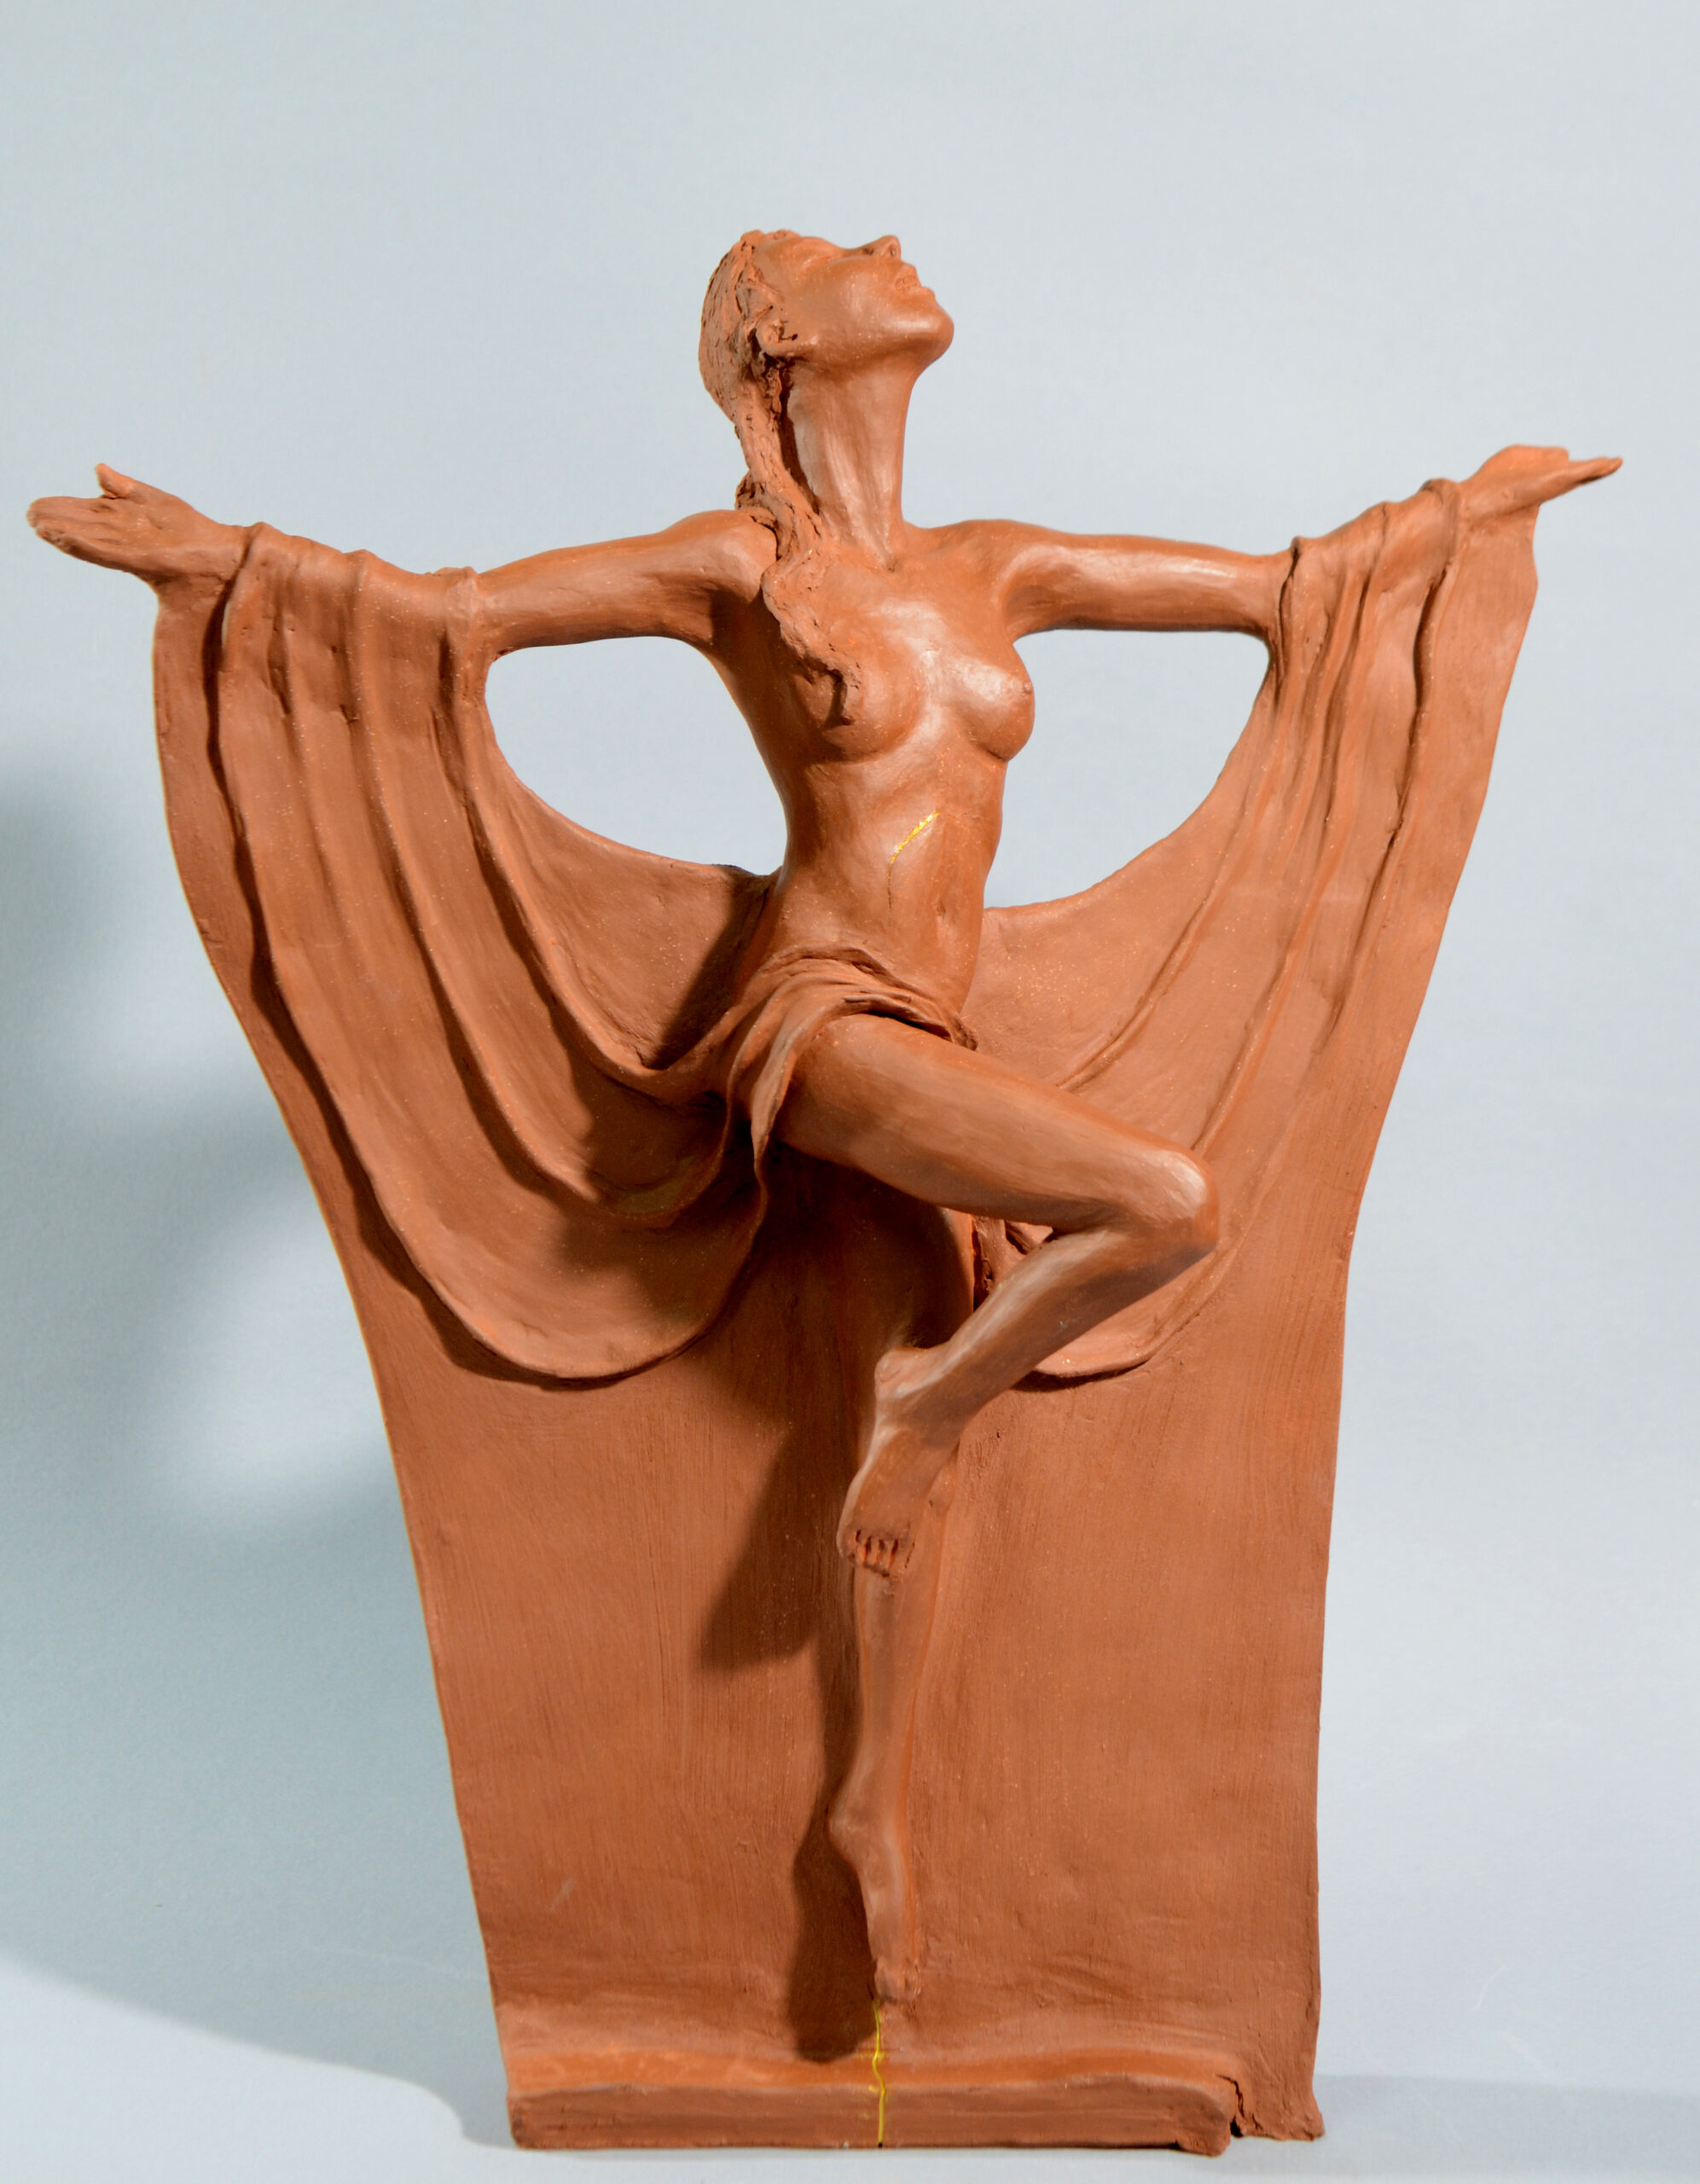 Clay figure sculpture: Papillon